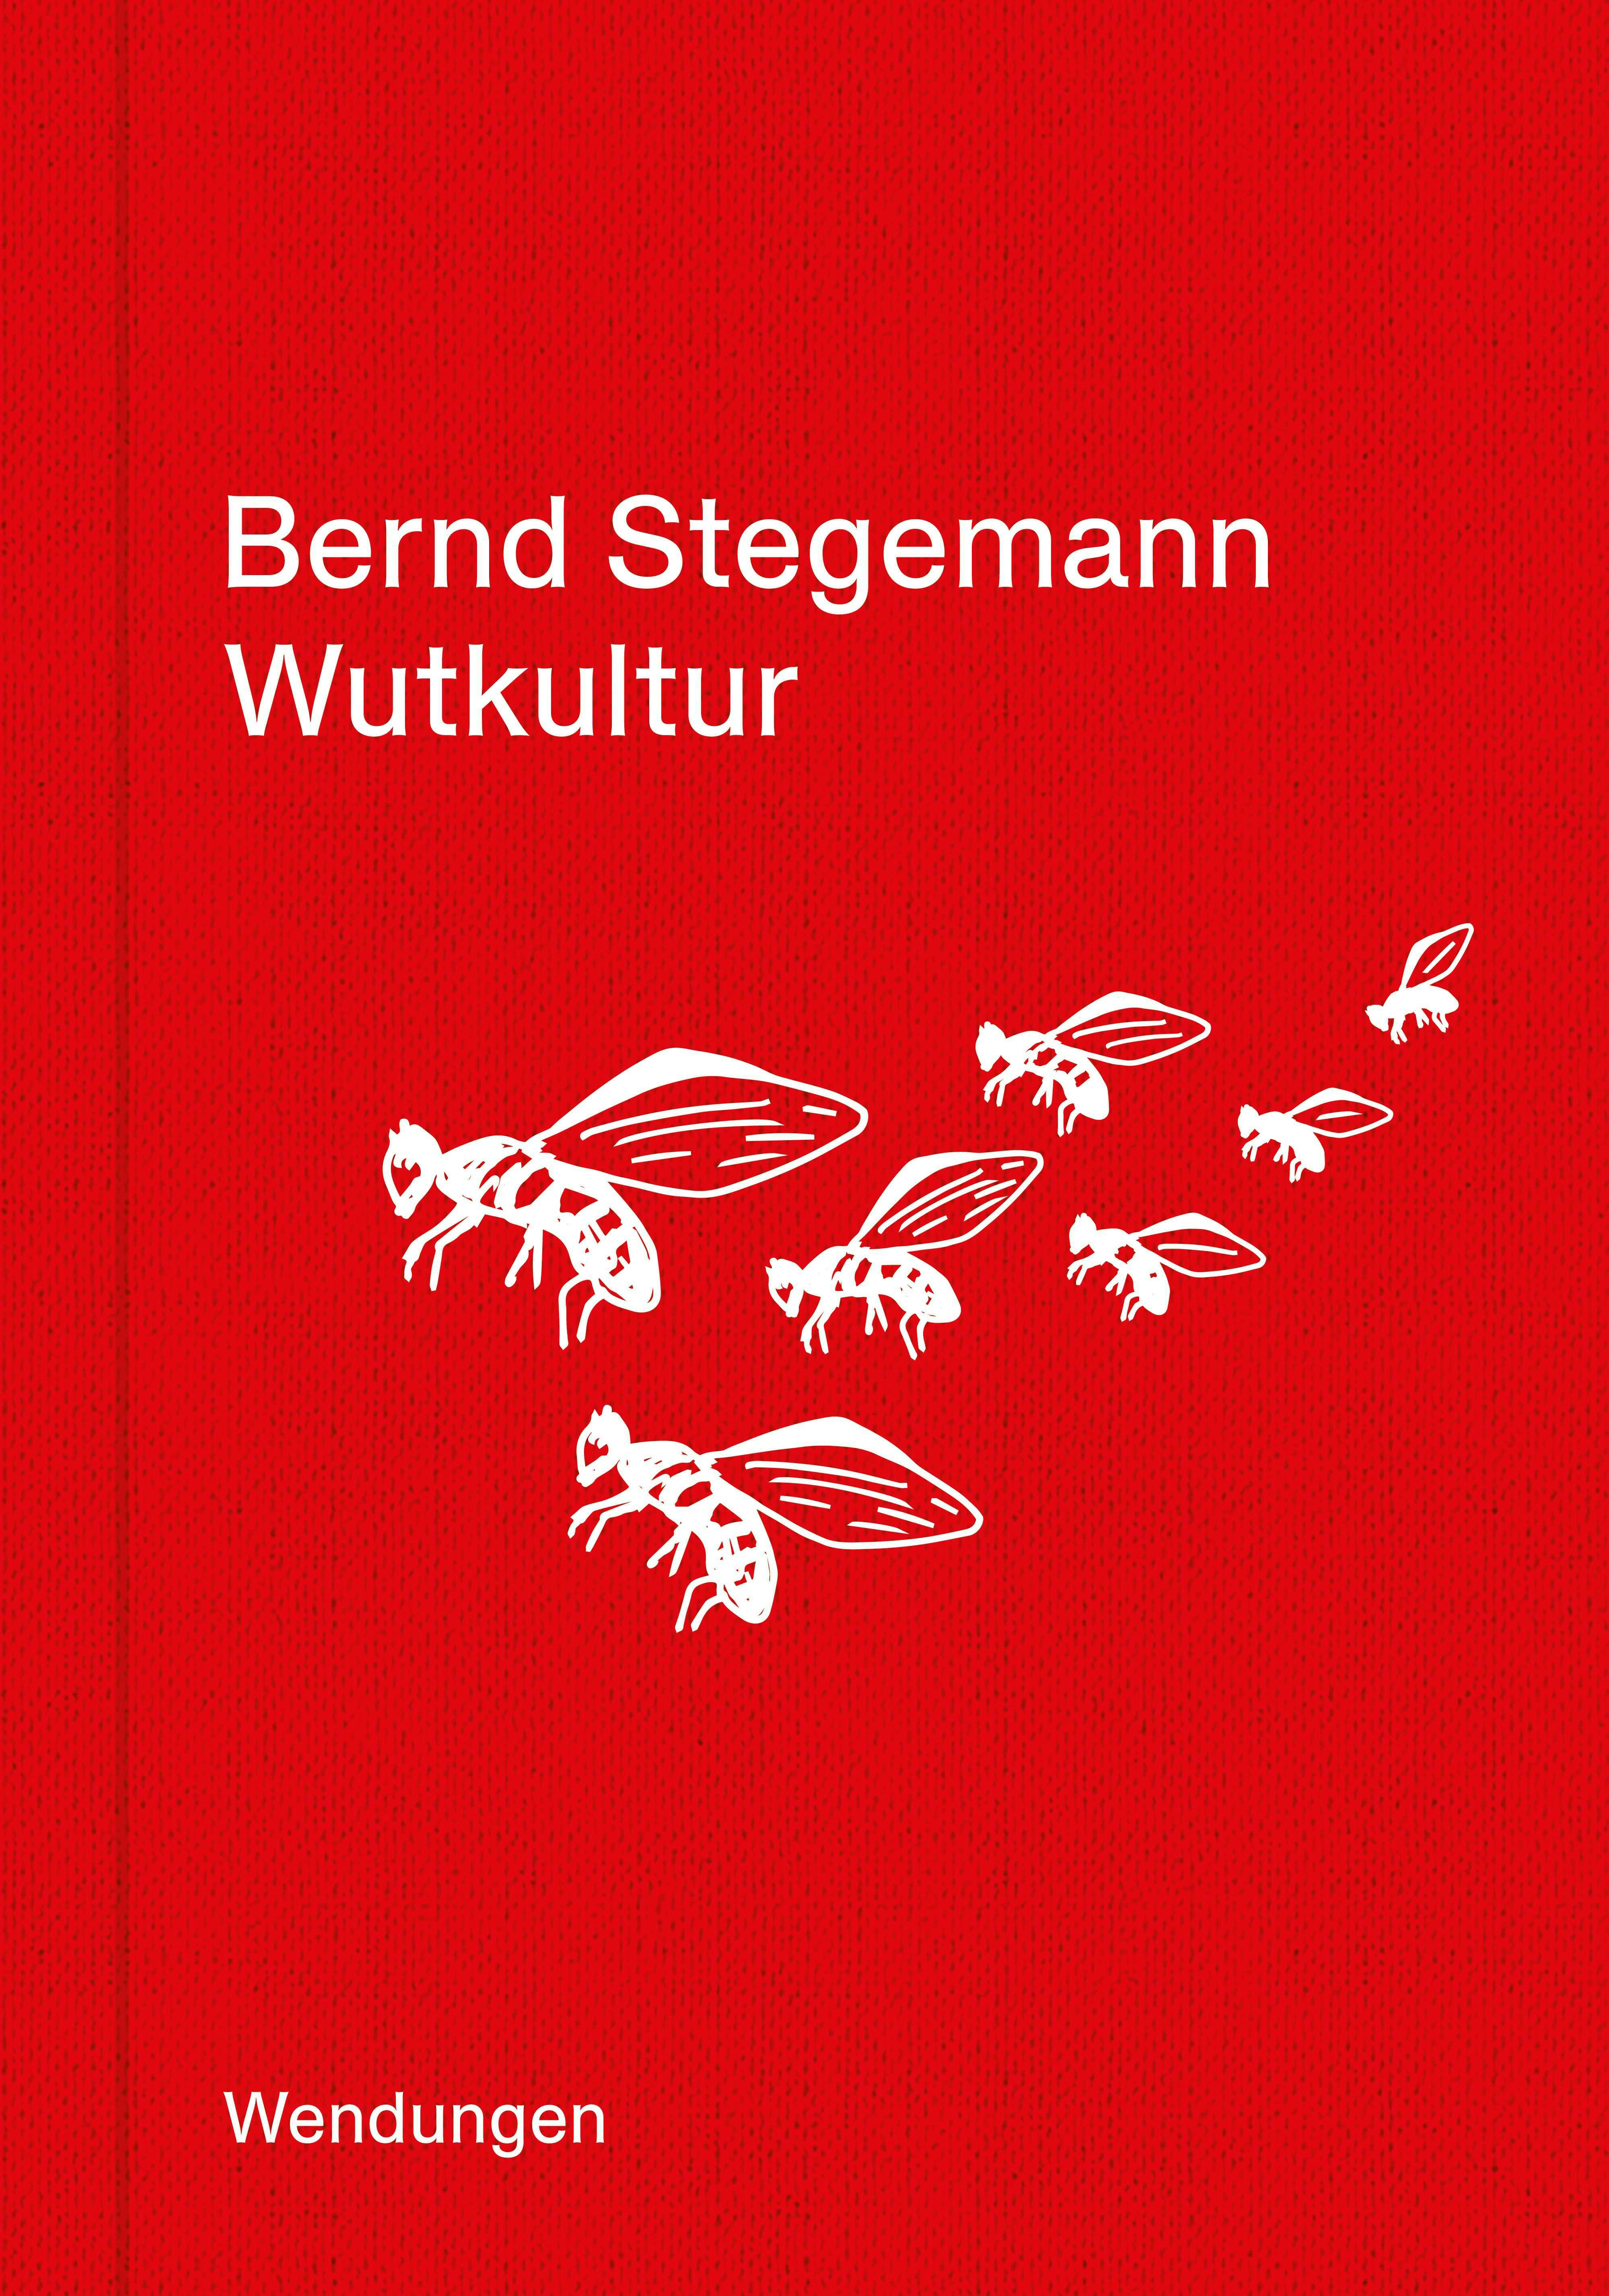 Wutkultur - Bernd Stegemann